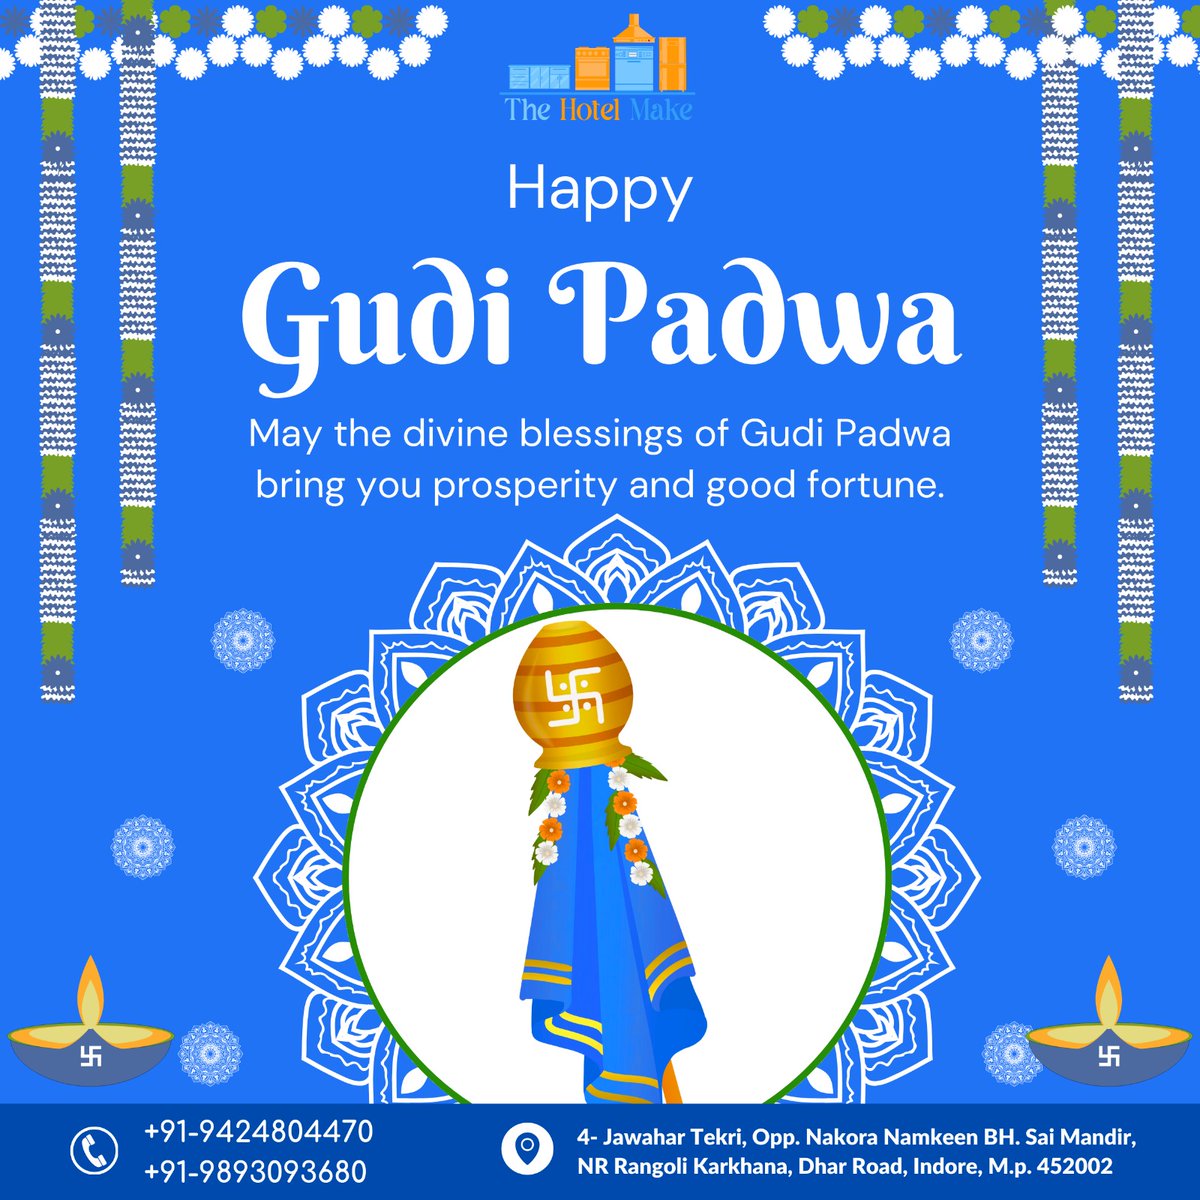 Happy Gudi Padwa May the divine blessings of Gudi Padwa bring you prosperity and good fortune.
.
.
#GudiPadwa2024 #ShubhGudiPadwa #GudiParvaCelebrations #MarathiNewYear #SpringFestival #GudiRaising #PuranPoliLove #RangaRangoli #MaharashtraFestival #NewBeginnings